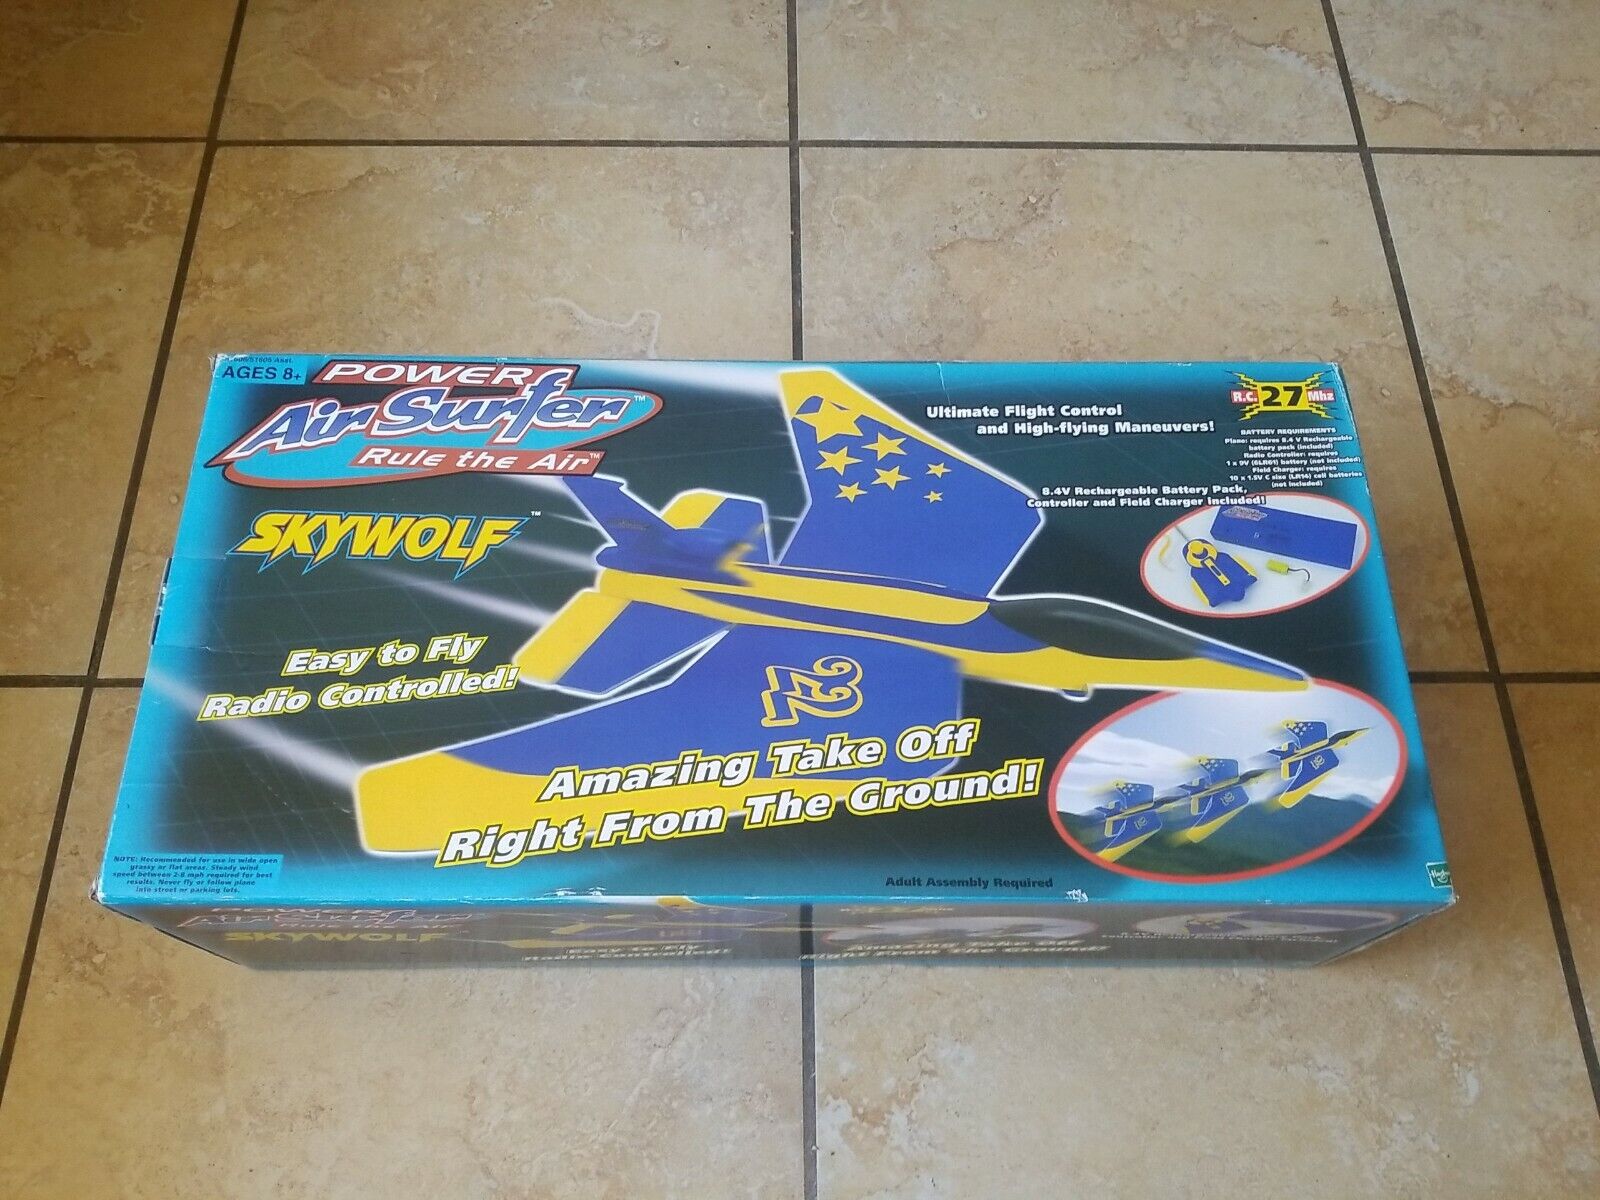 2003 Hasbro Power Air Surfer SkyWolf RC Toy Remote Control Airplane New NIOB